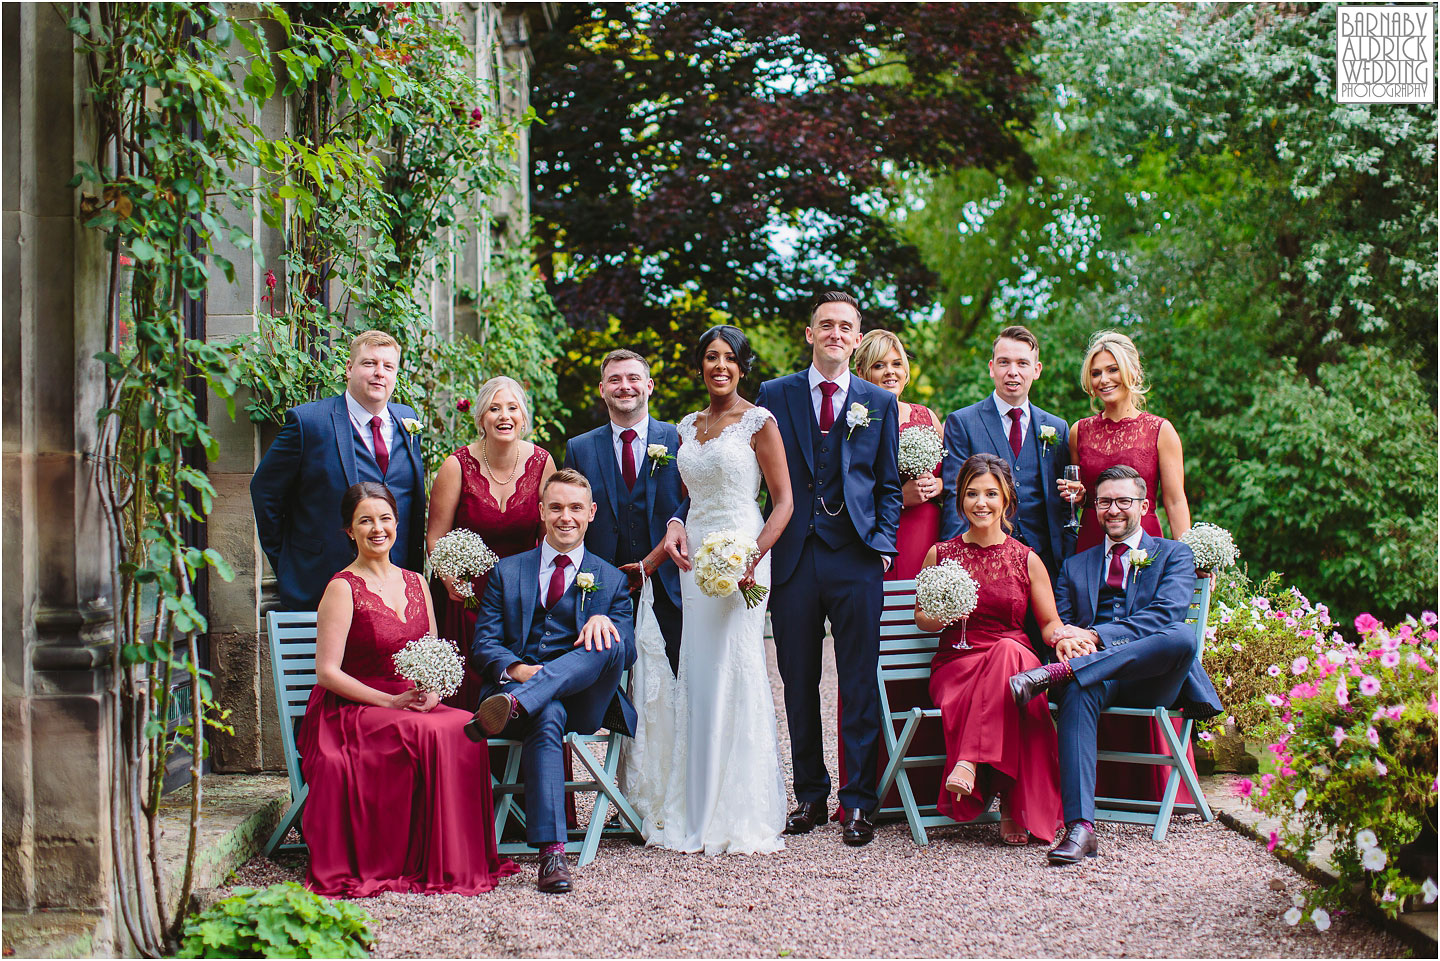 Beautiful Group wedding photo at Sandon Hall in staffordshire, Amazing Yorkshire Wedding Photos, Best Yorkshire Wedding Photos 2018